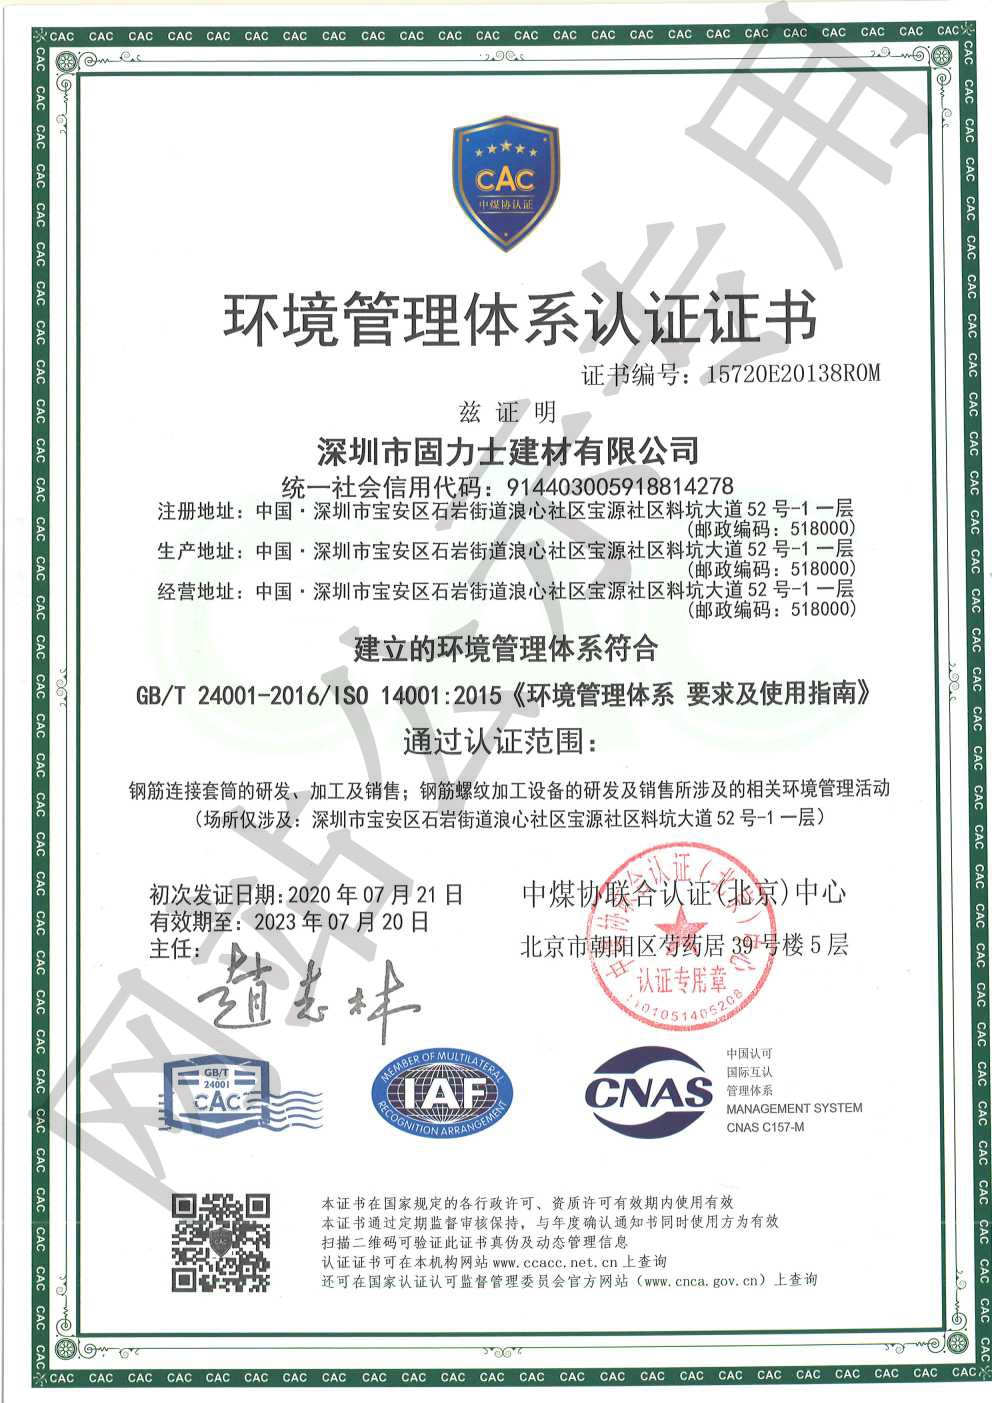 镜湖ISO14001证书